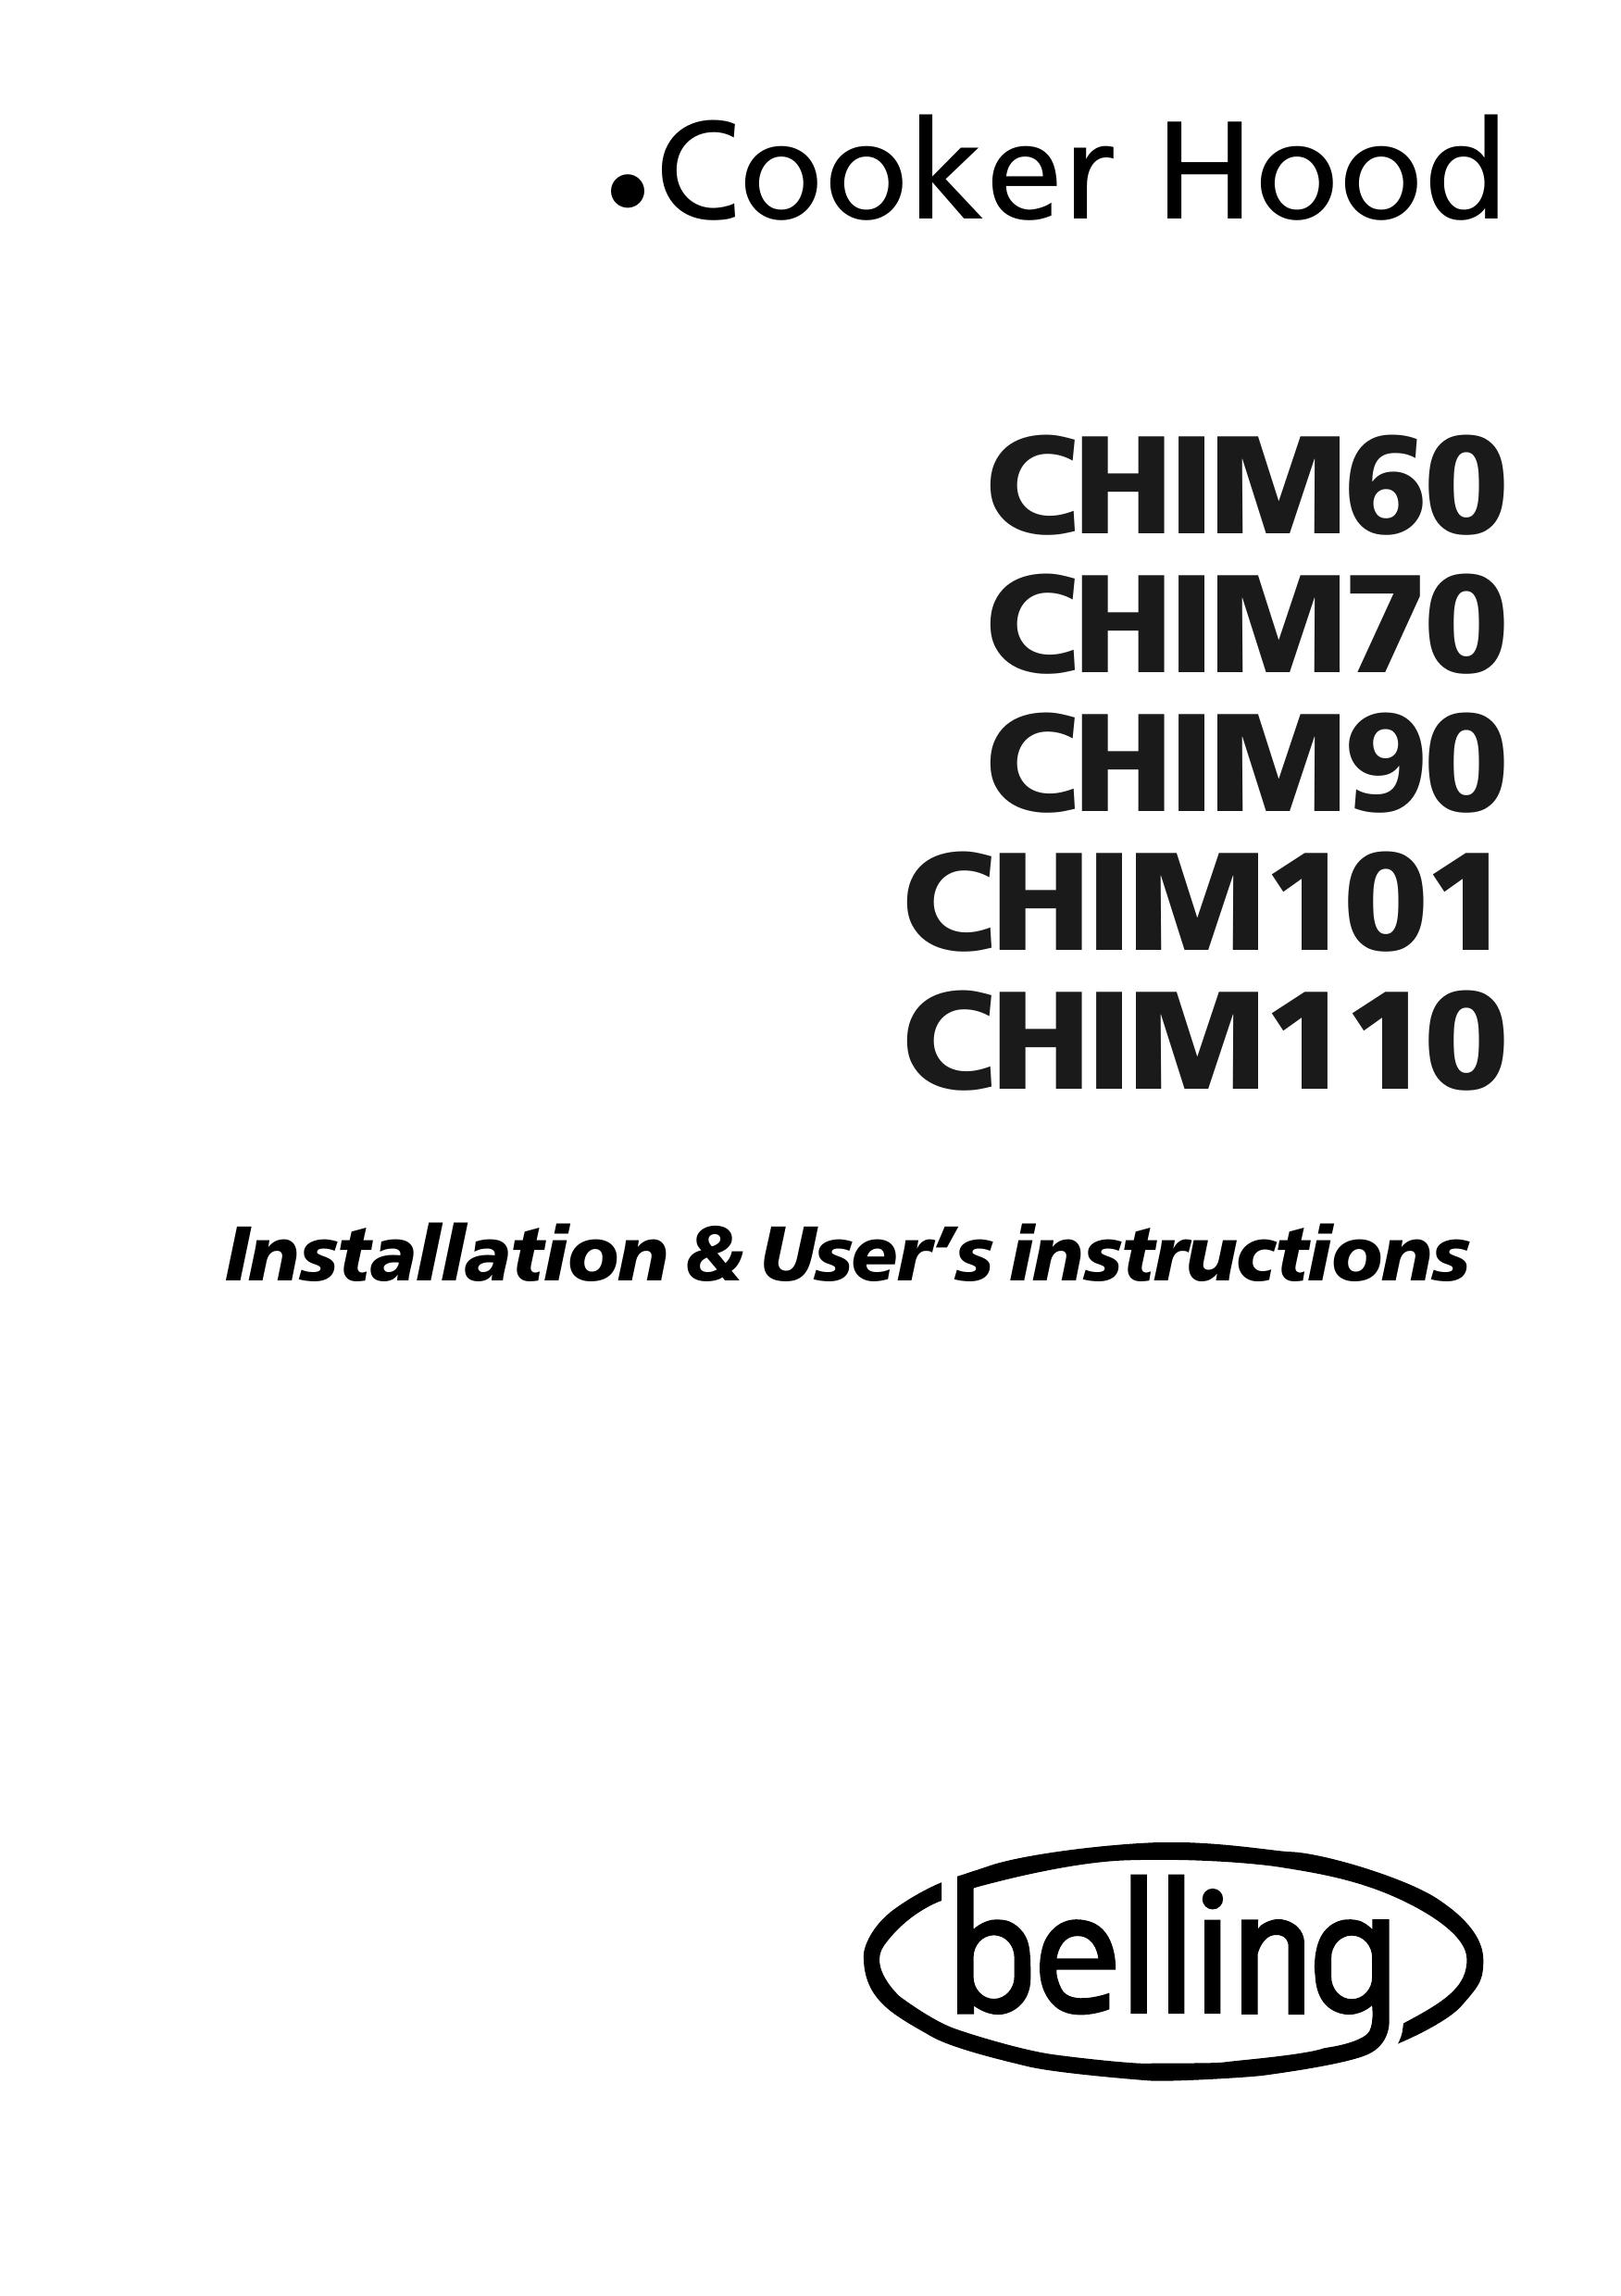 Glen Dimplex Home Appliances Ltd CHIM90 Ventilation Hood User Manual